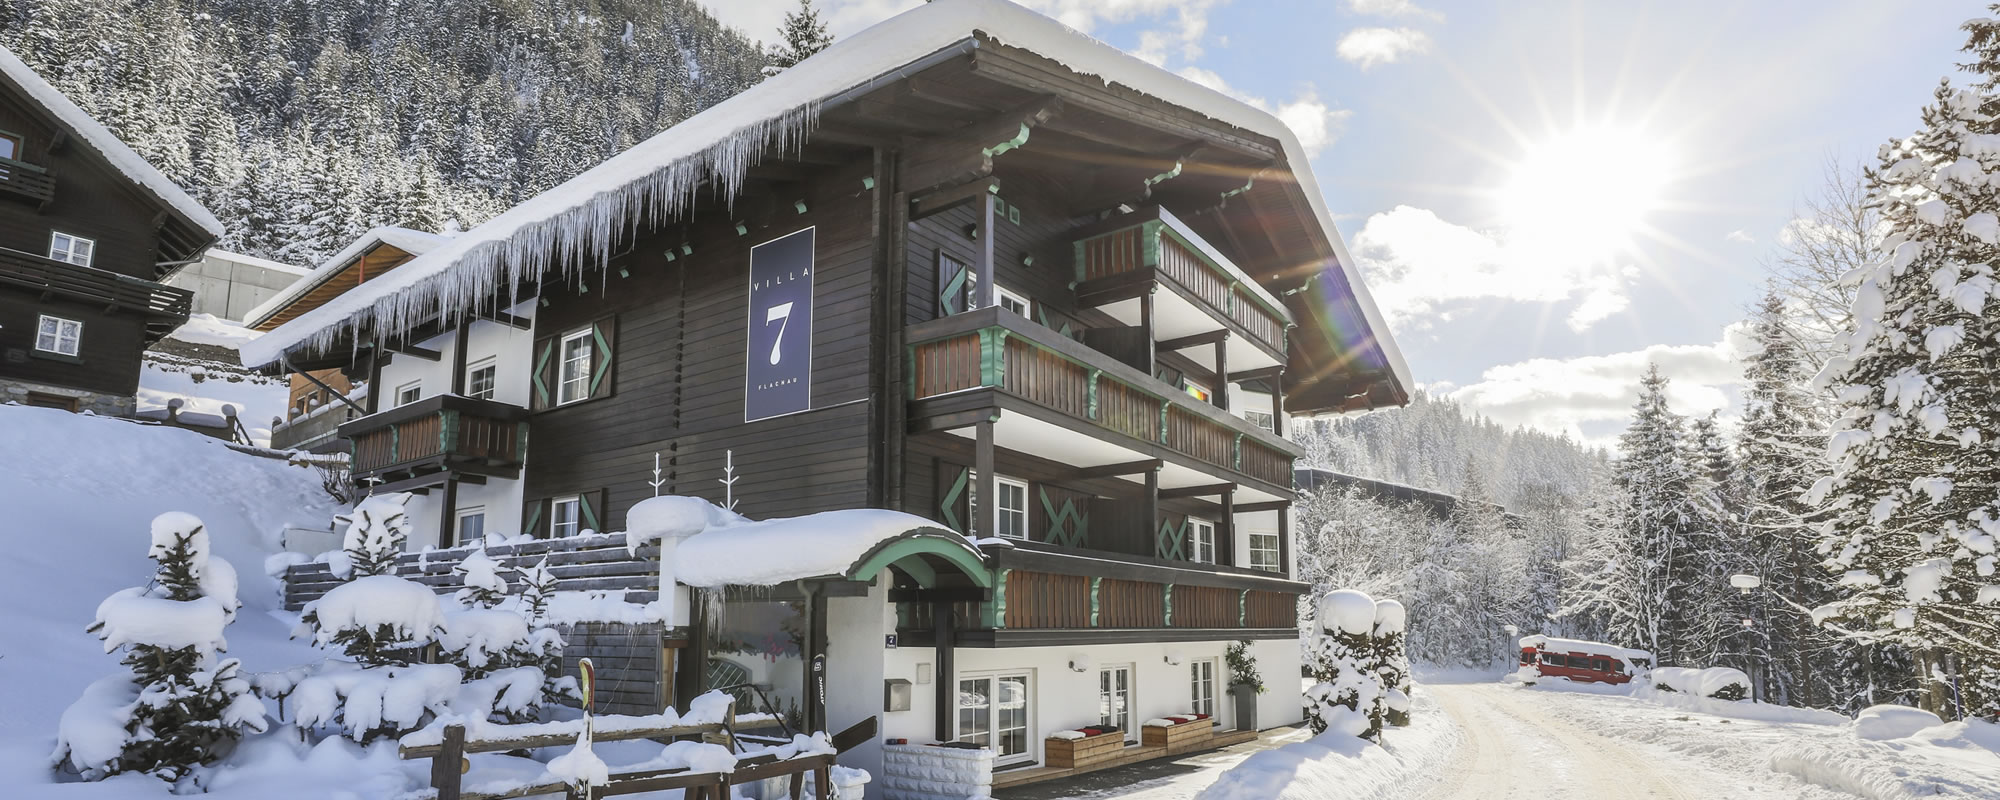 Villa 7 - Skiurlaub in Ski amadé @ Flachau Tourismus